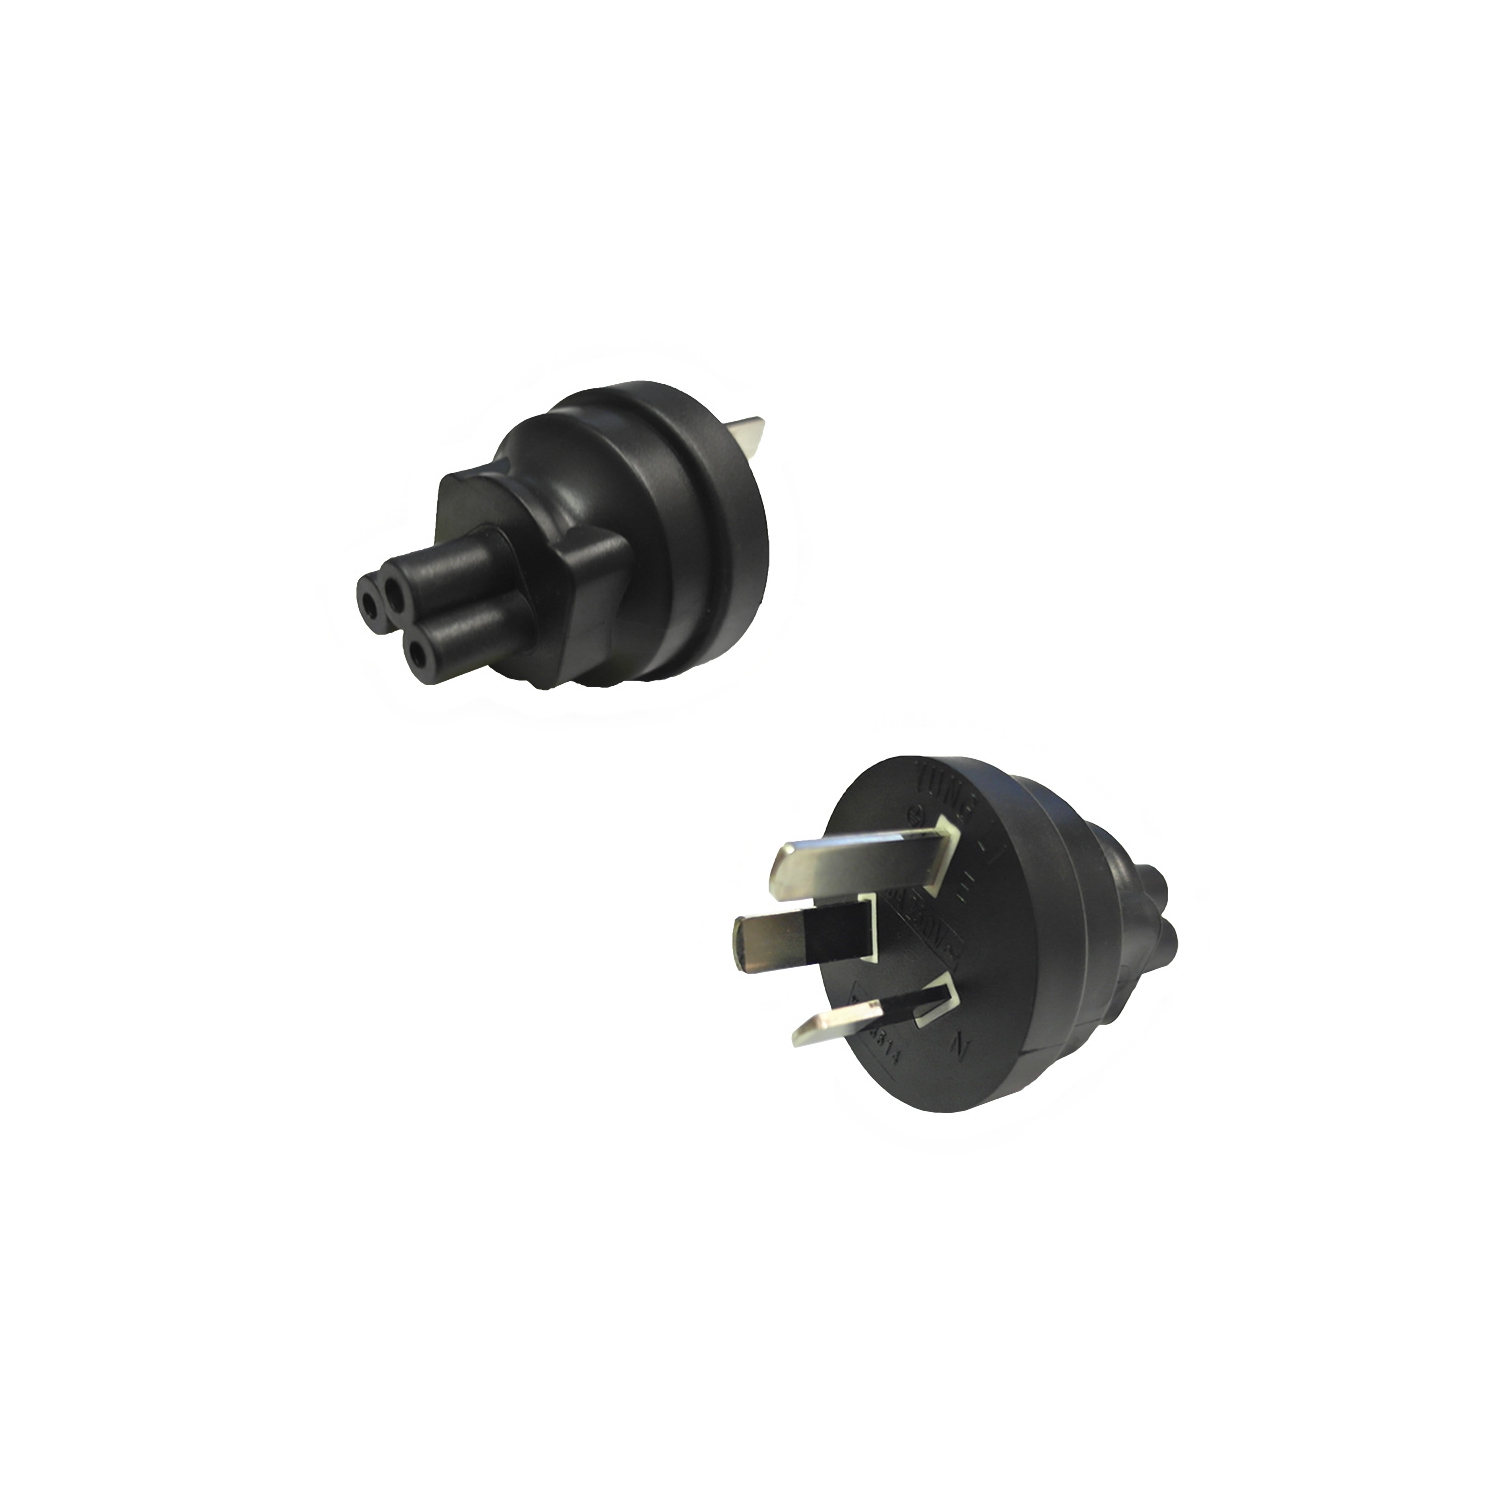 Hyfai Australia AS3112 Male Plug to C5 Female Receptacle Power Cord Converter Adapter 2PK